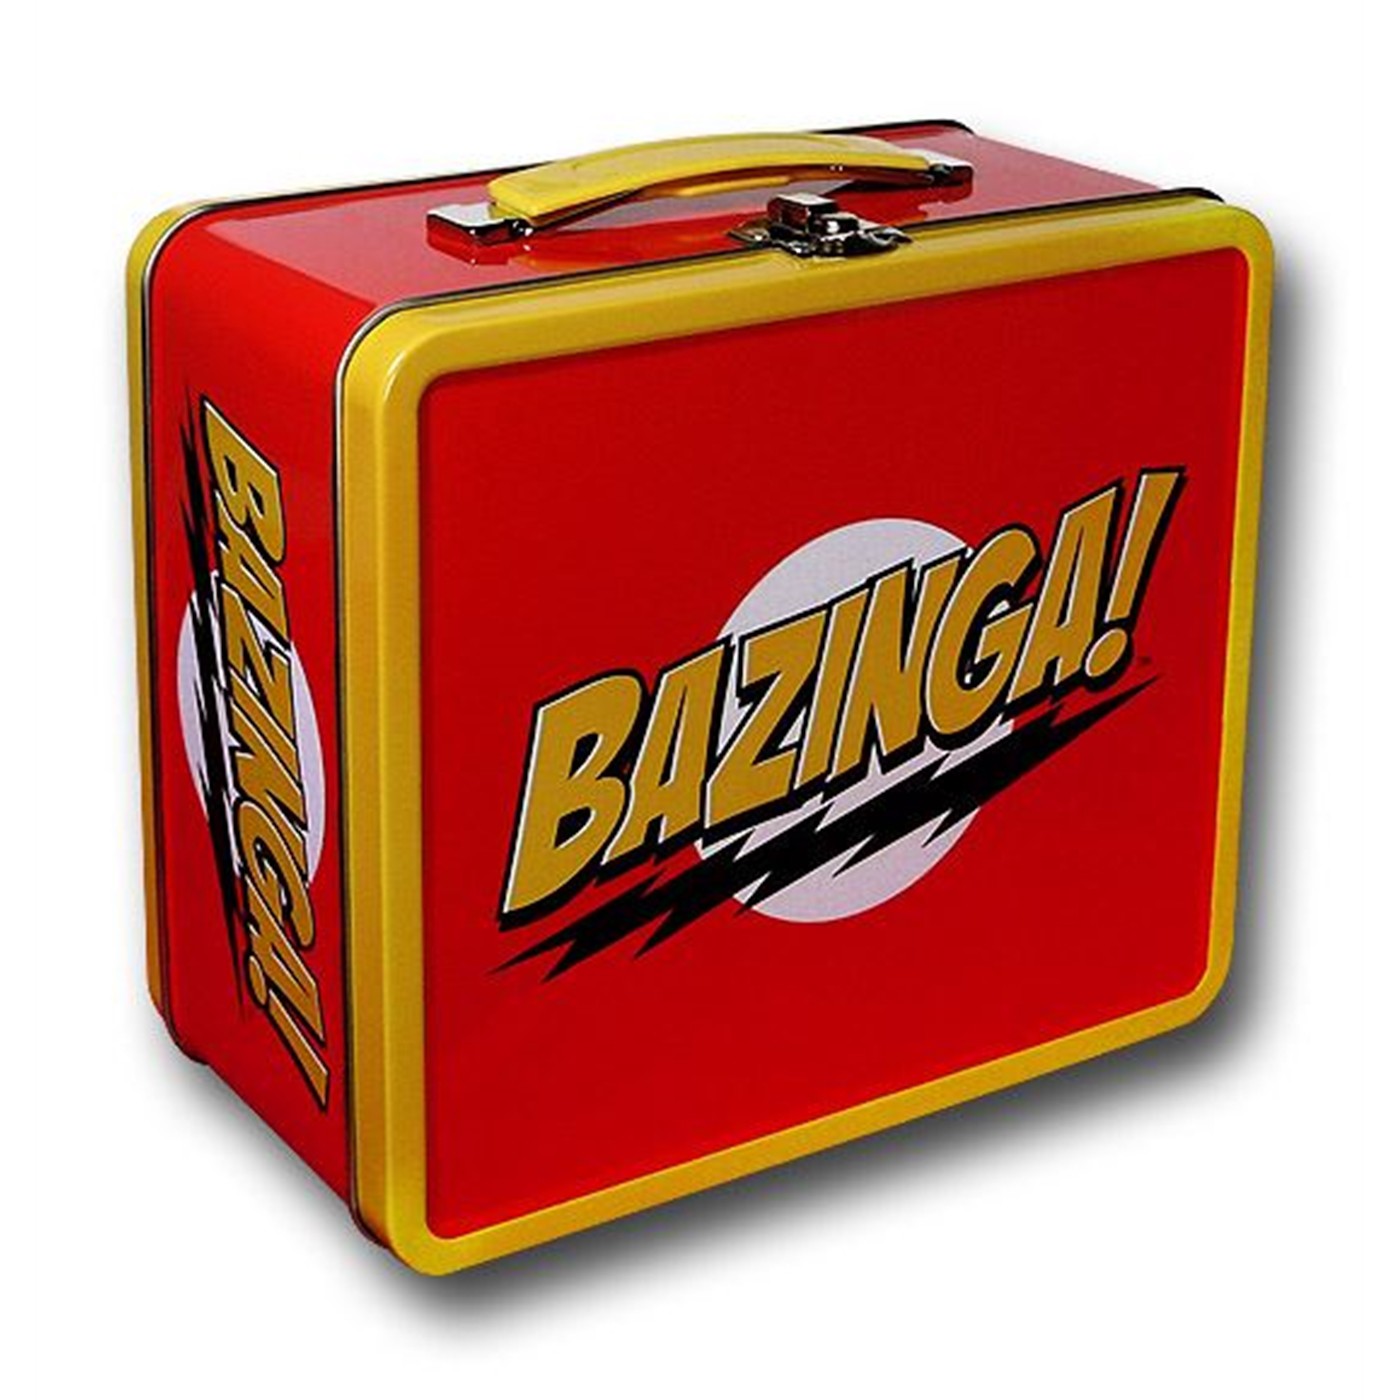 Big Bang Theory Bazinga Lunchbox